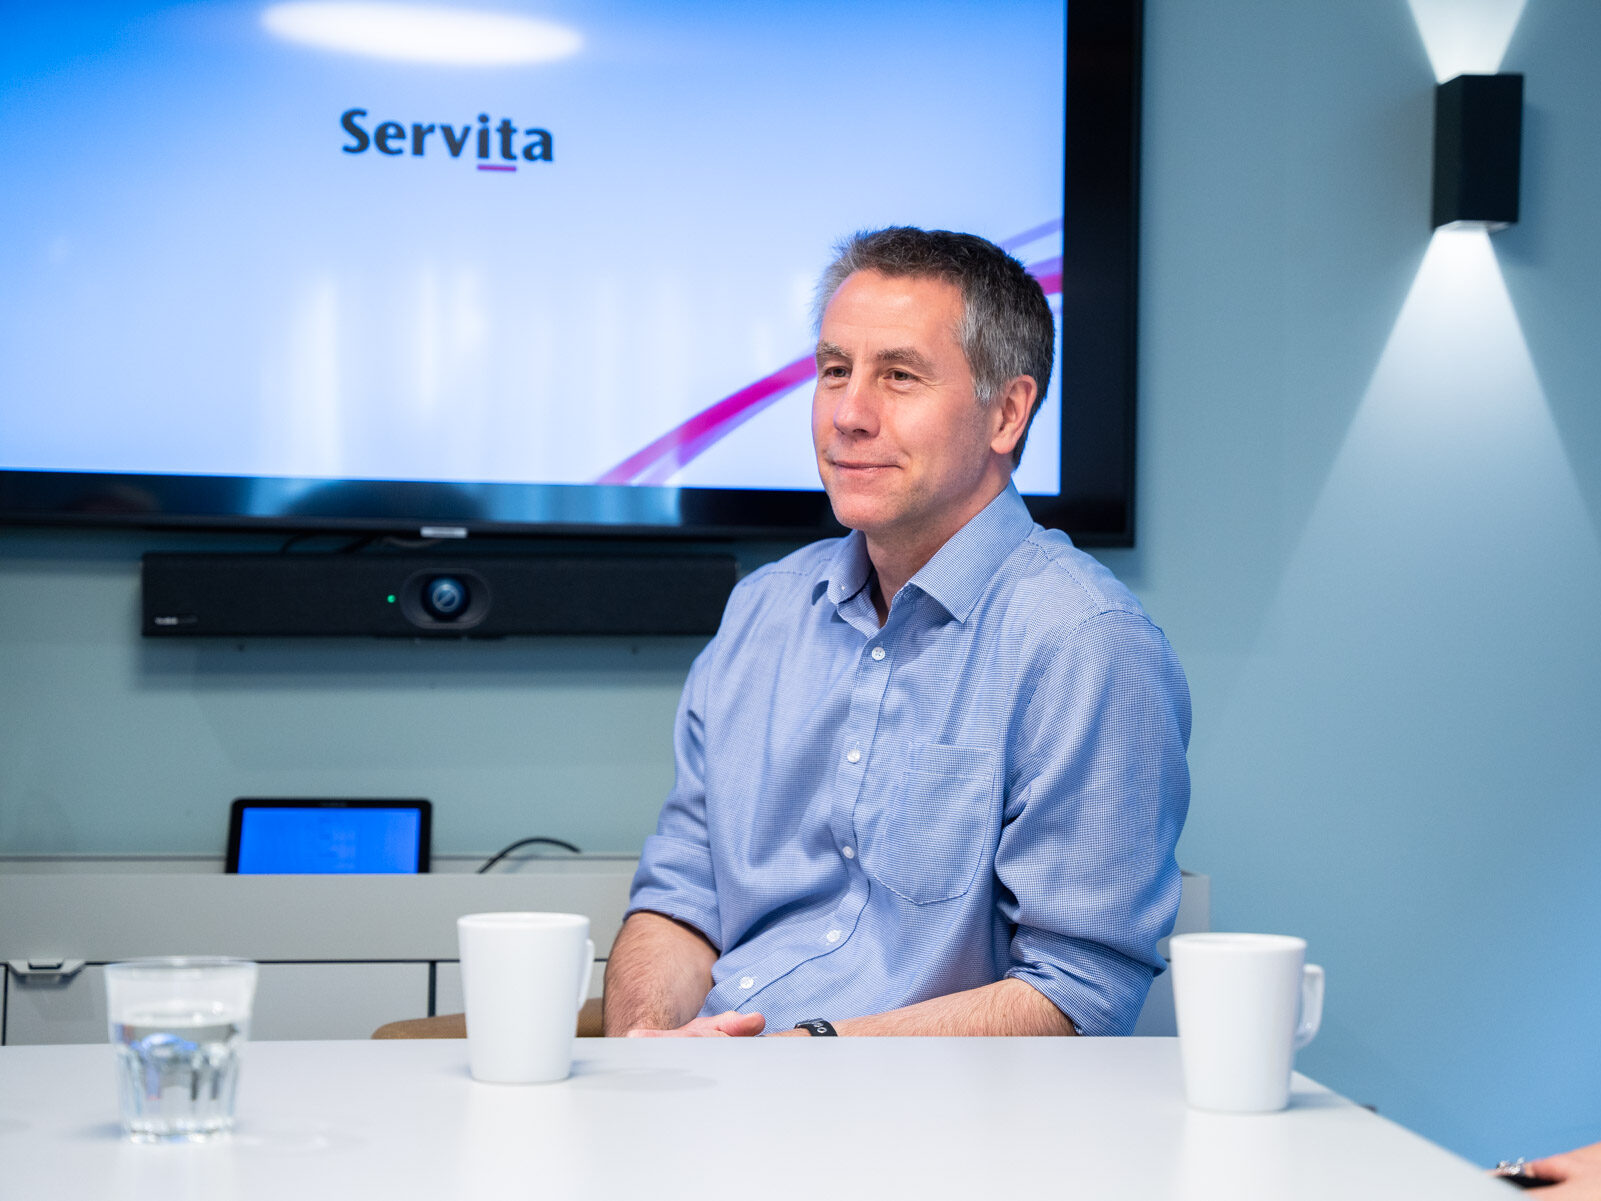 Use the power of data | Servita